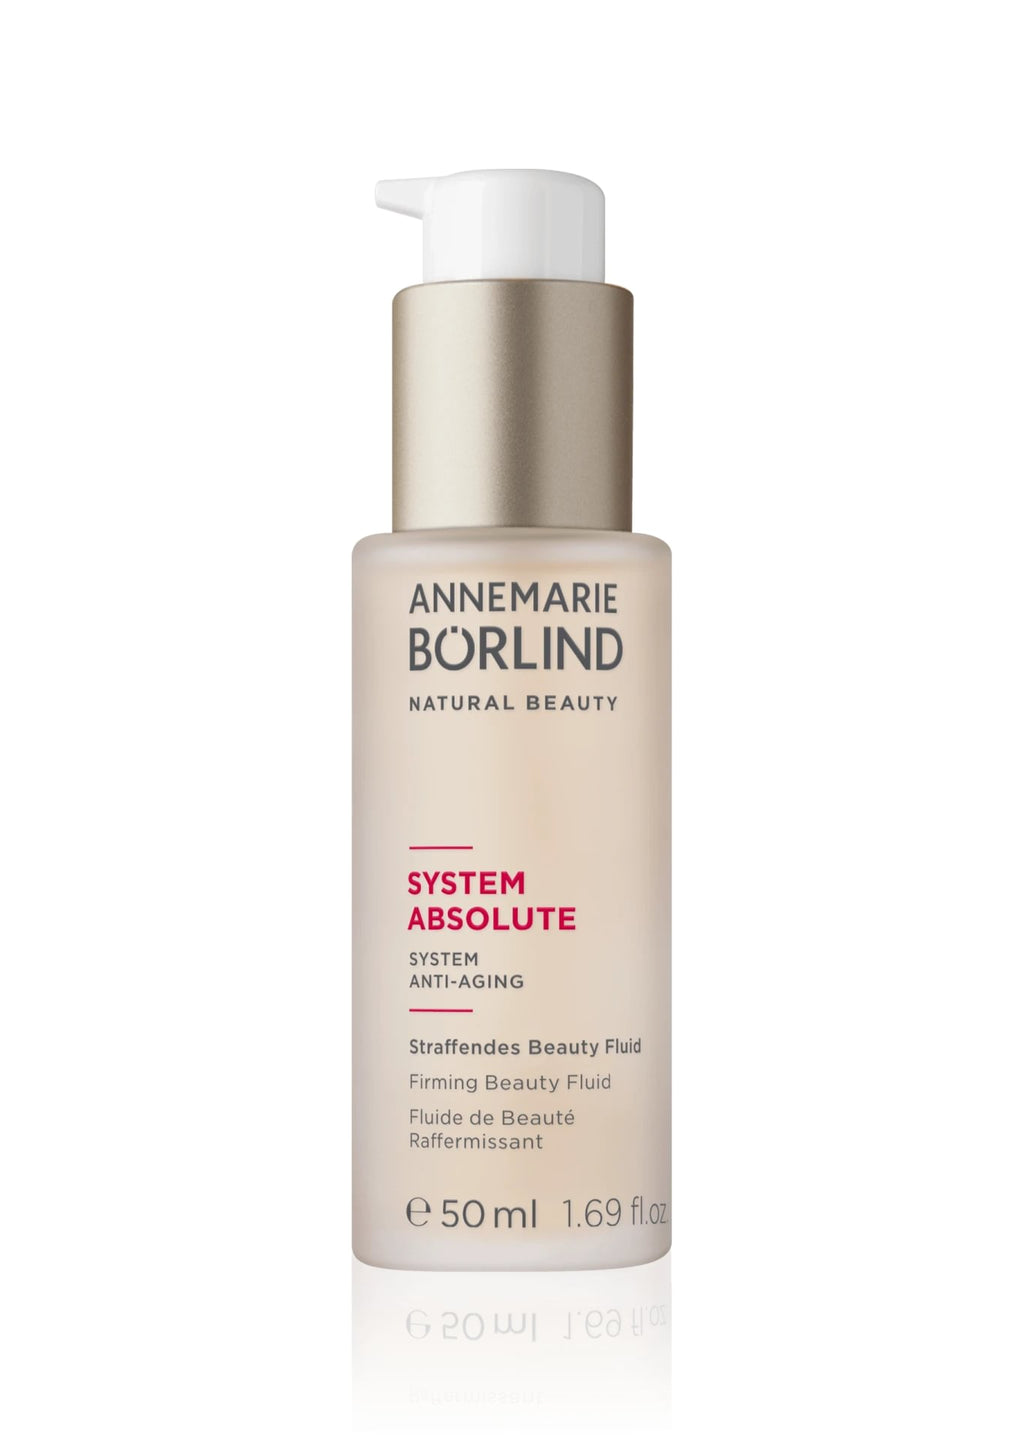 Annemarie Borlind System Absolute Straffendes Beauty Fluid, 50ml